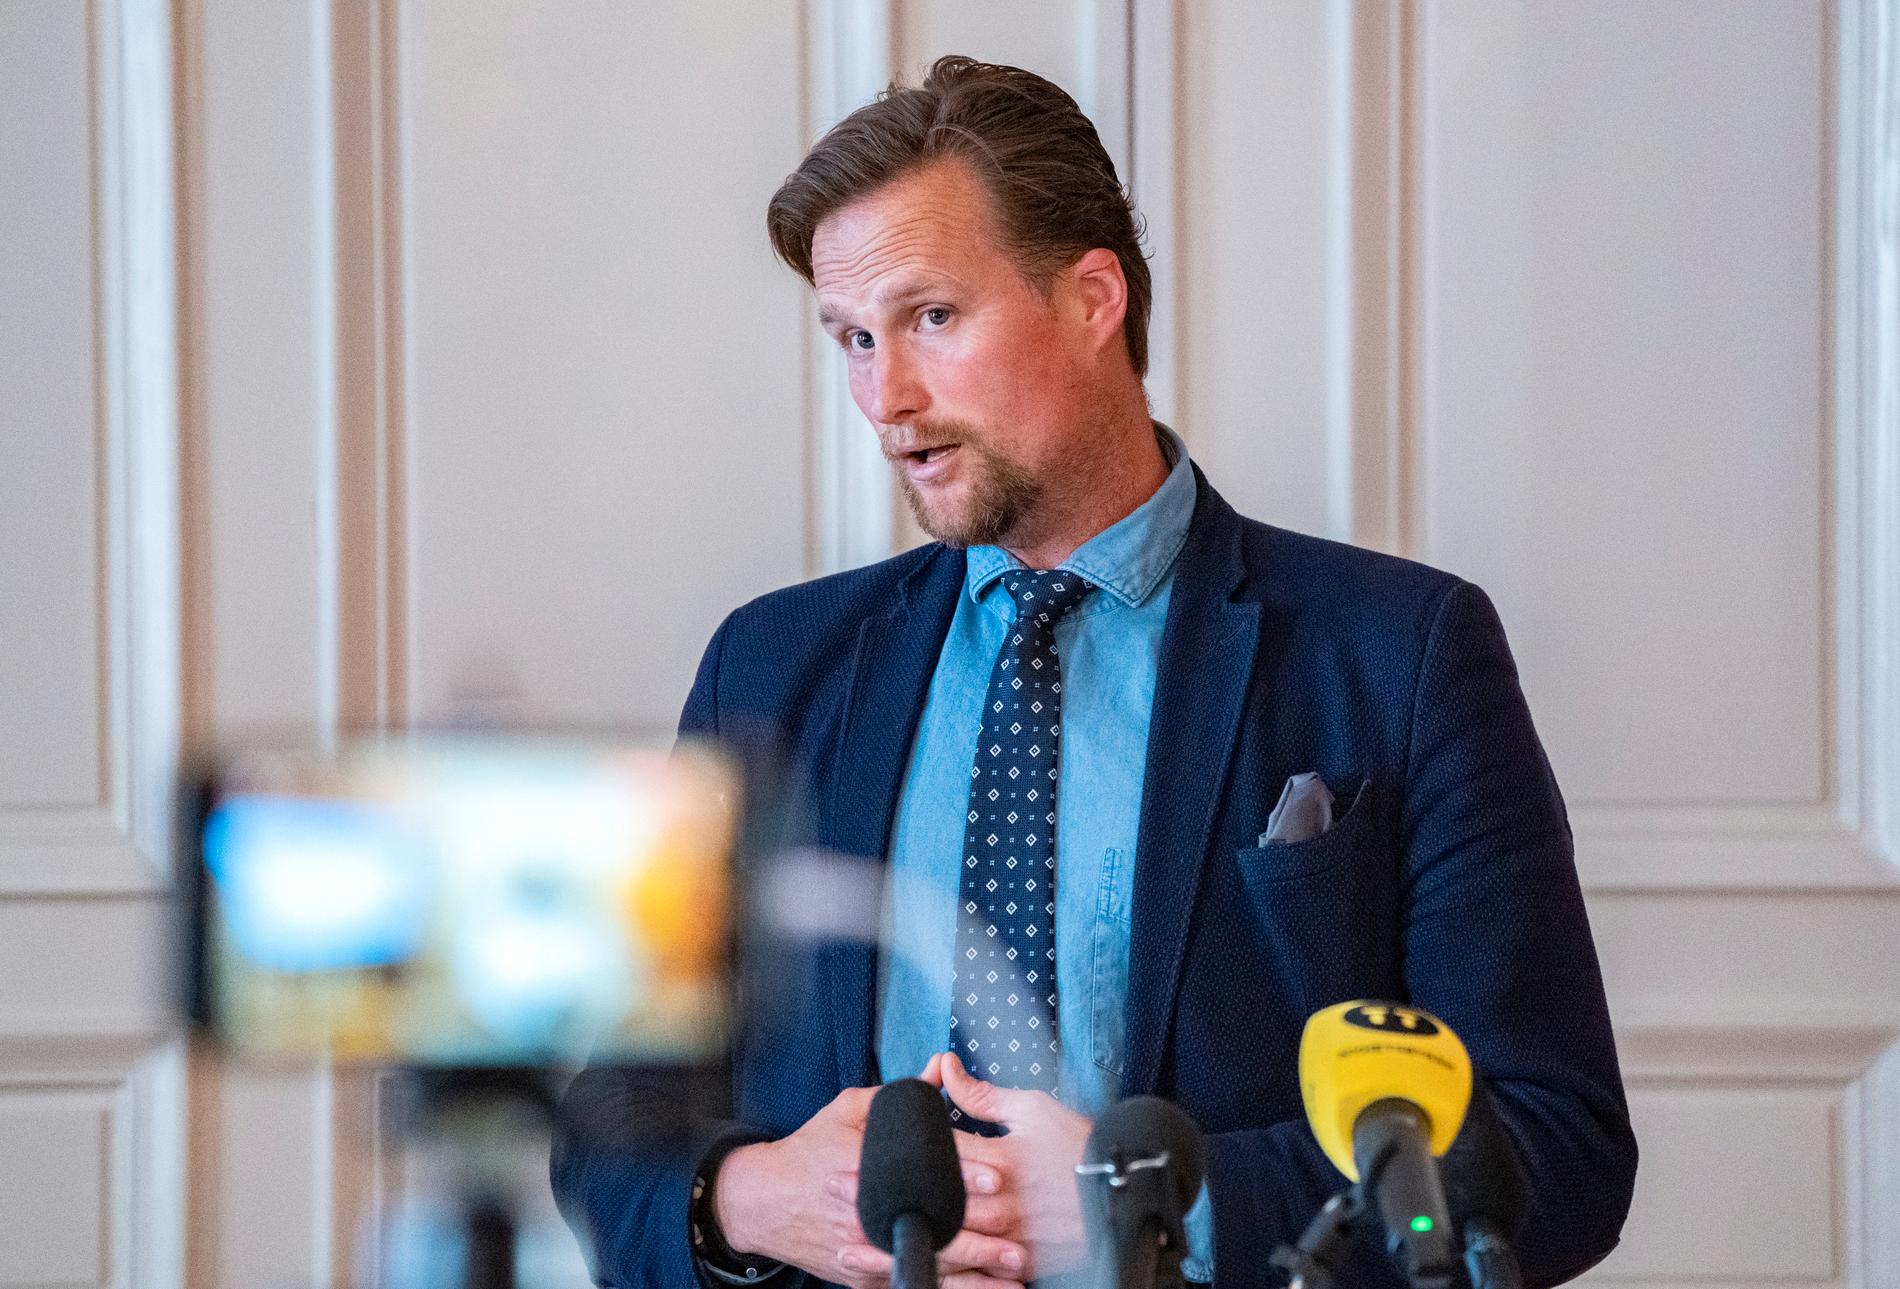 Skånes regionråd Carl Johan Sonesson (M) under en presskonferens. Aerkivbild.